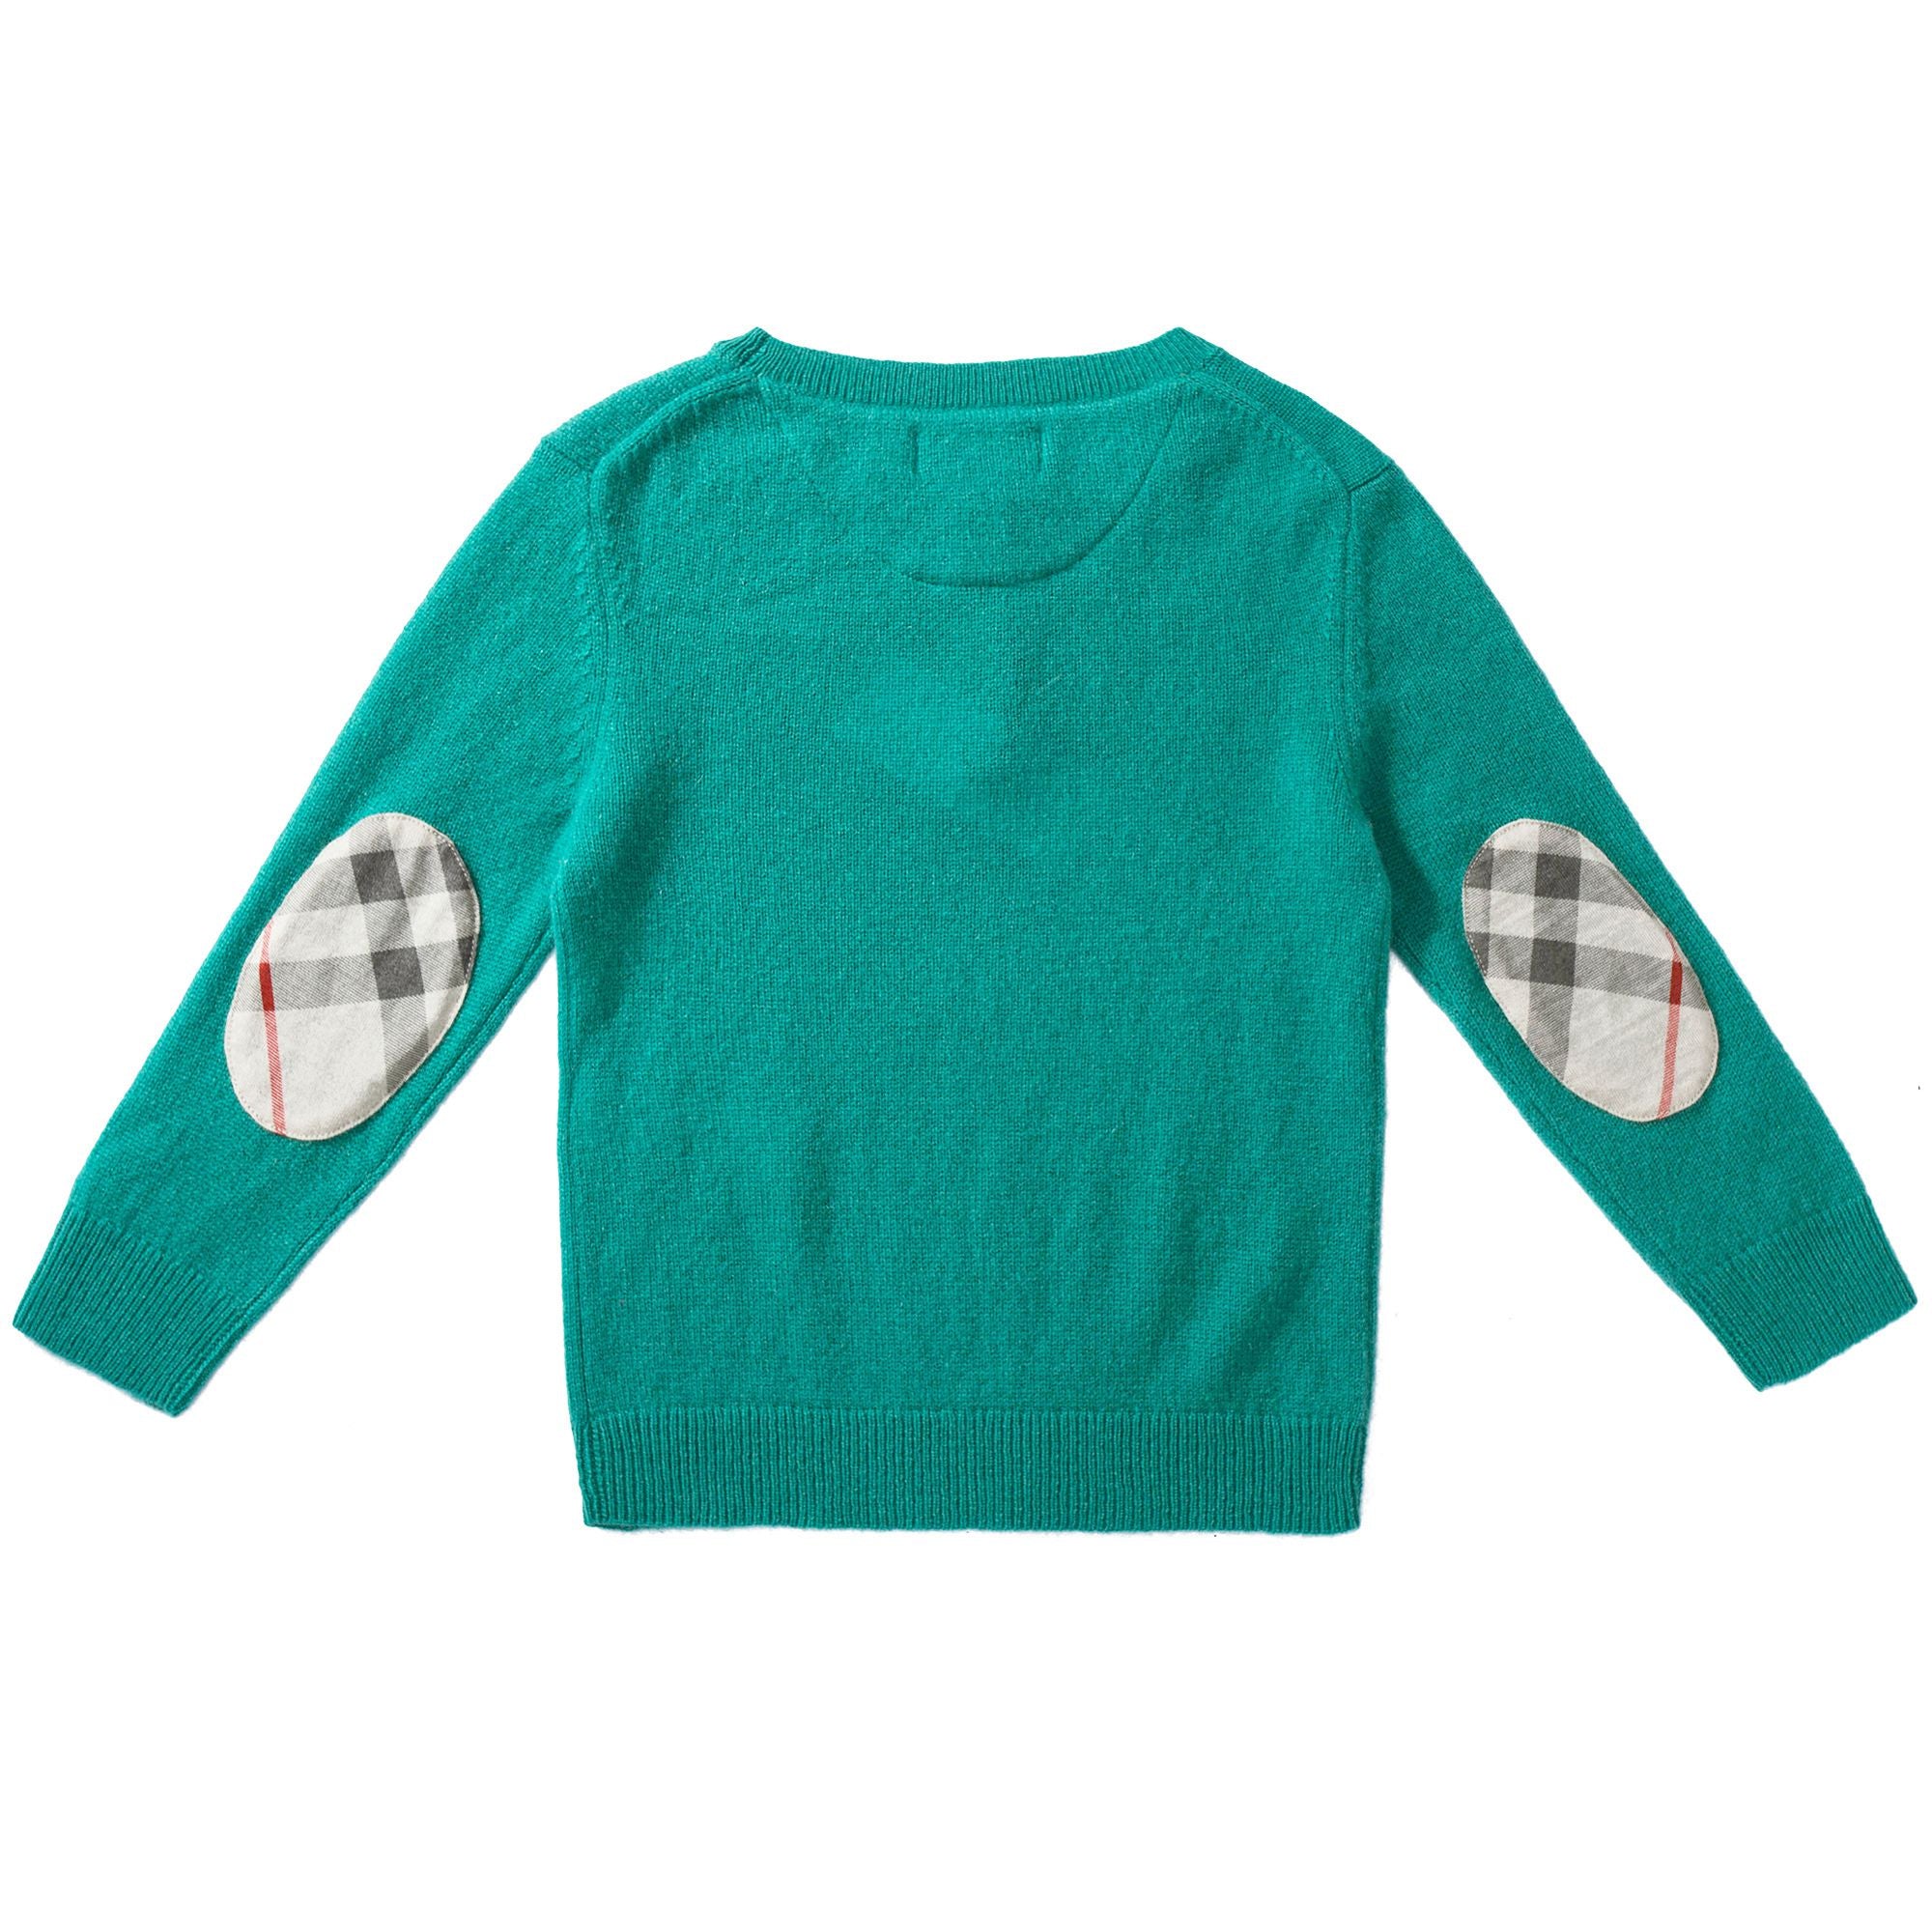 Bays  Bright  Green  Cashmere  Sweater